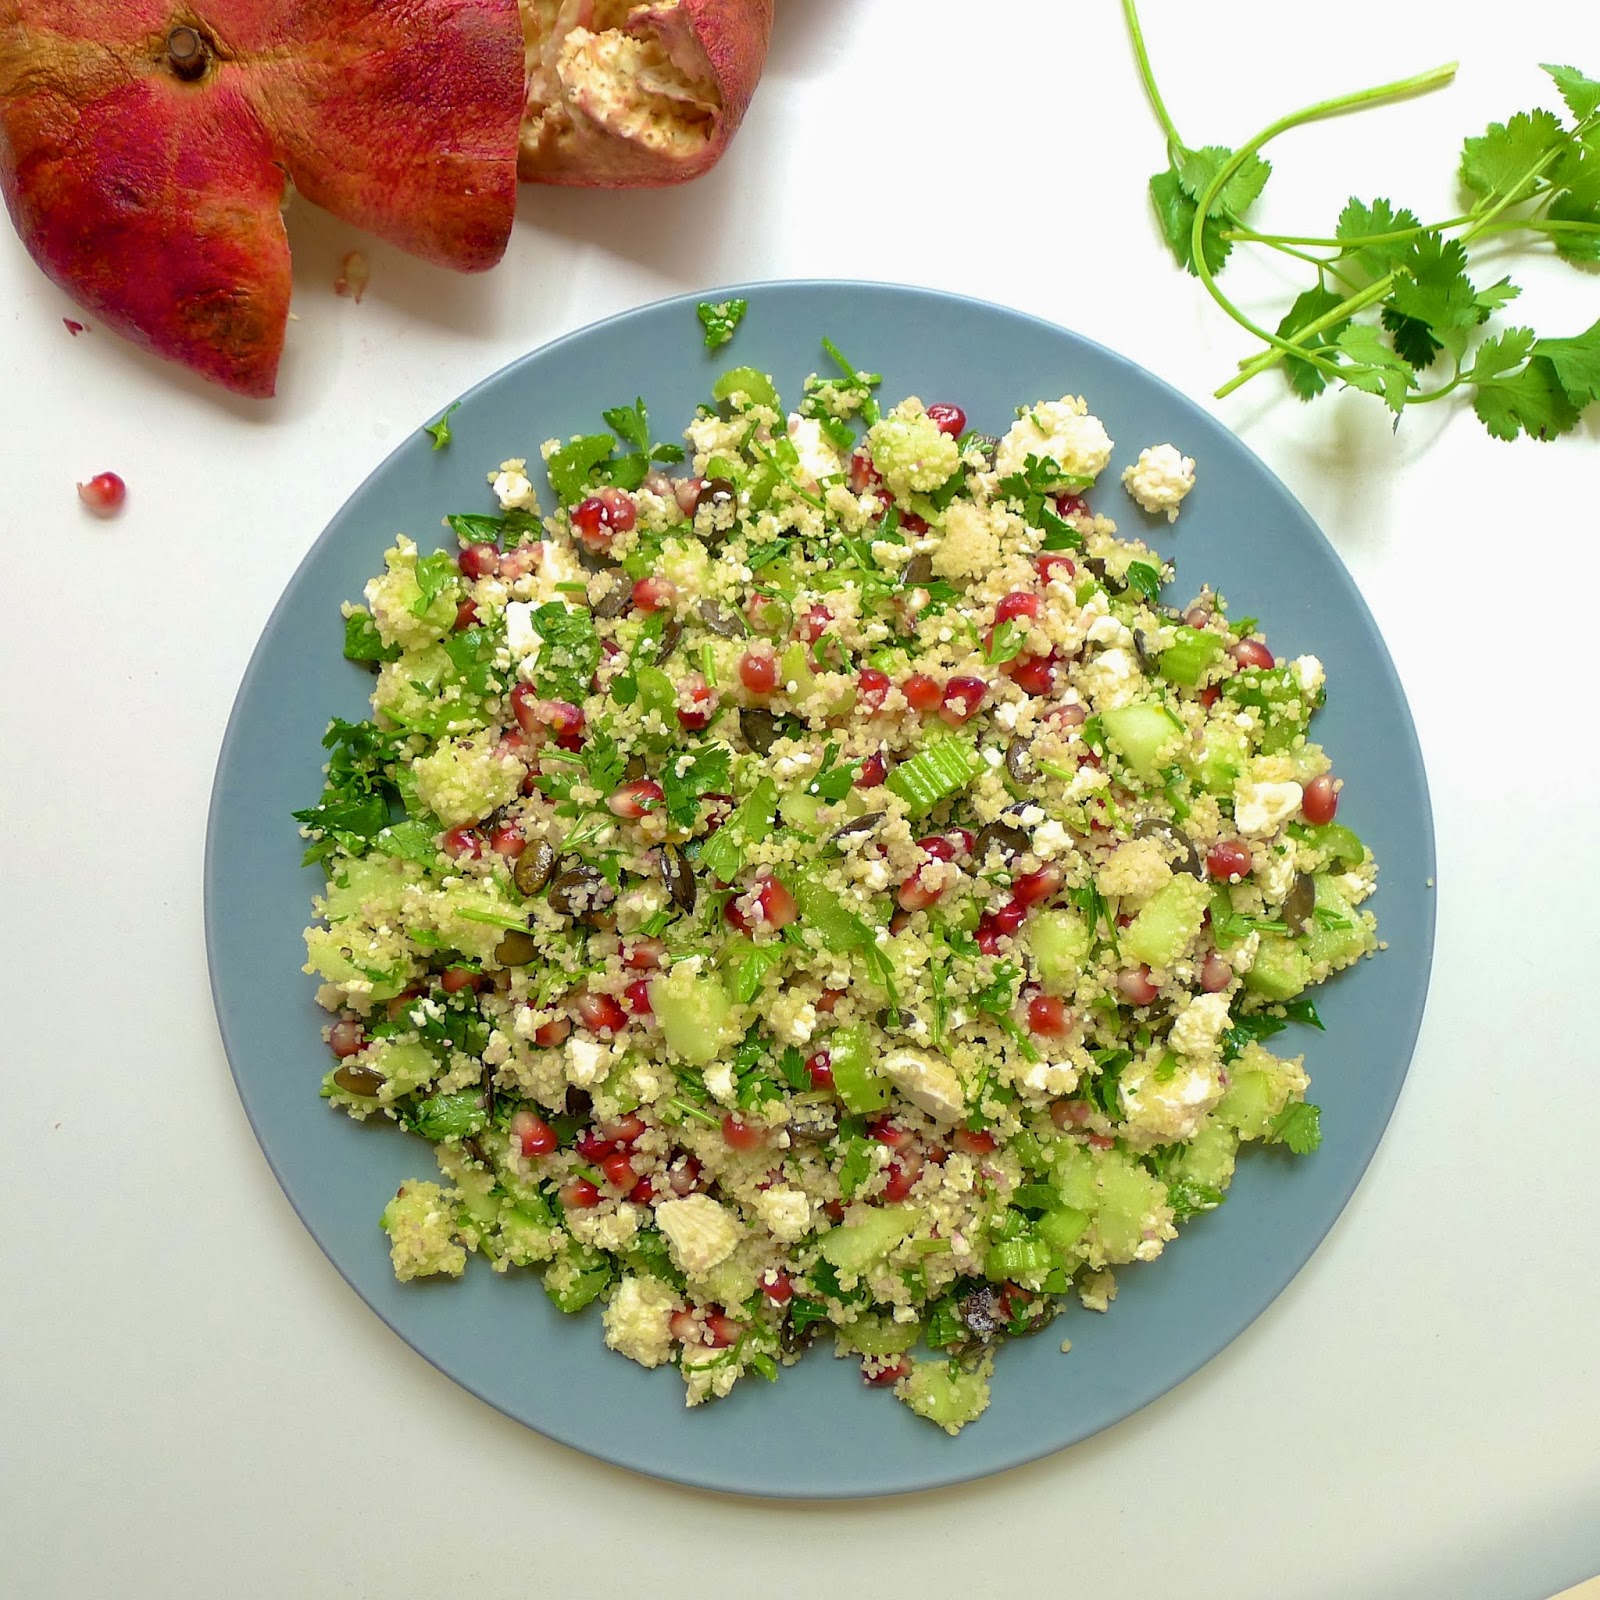 UndomestiKATEd: Pomegranate, feta and herb couscous salad